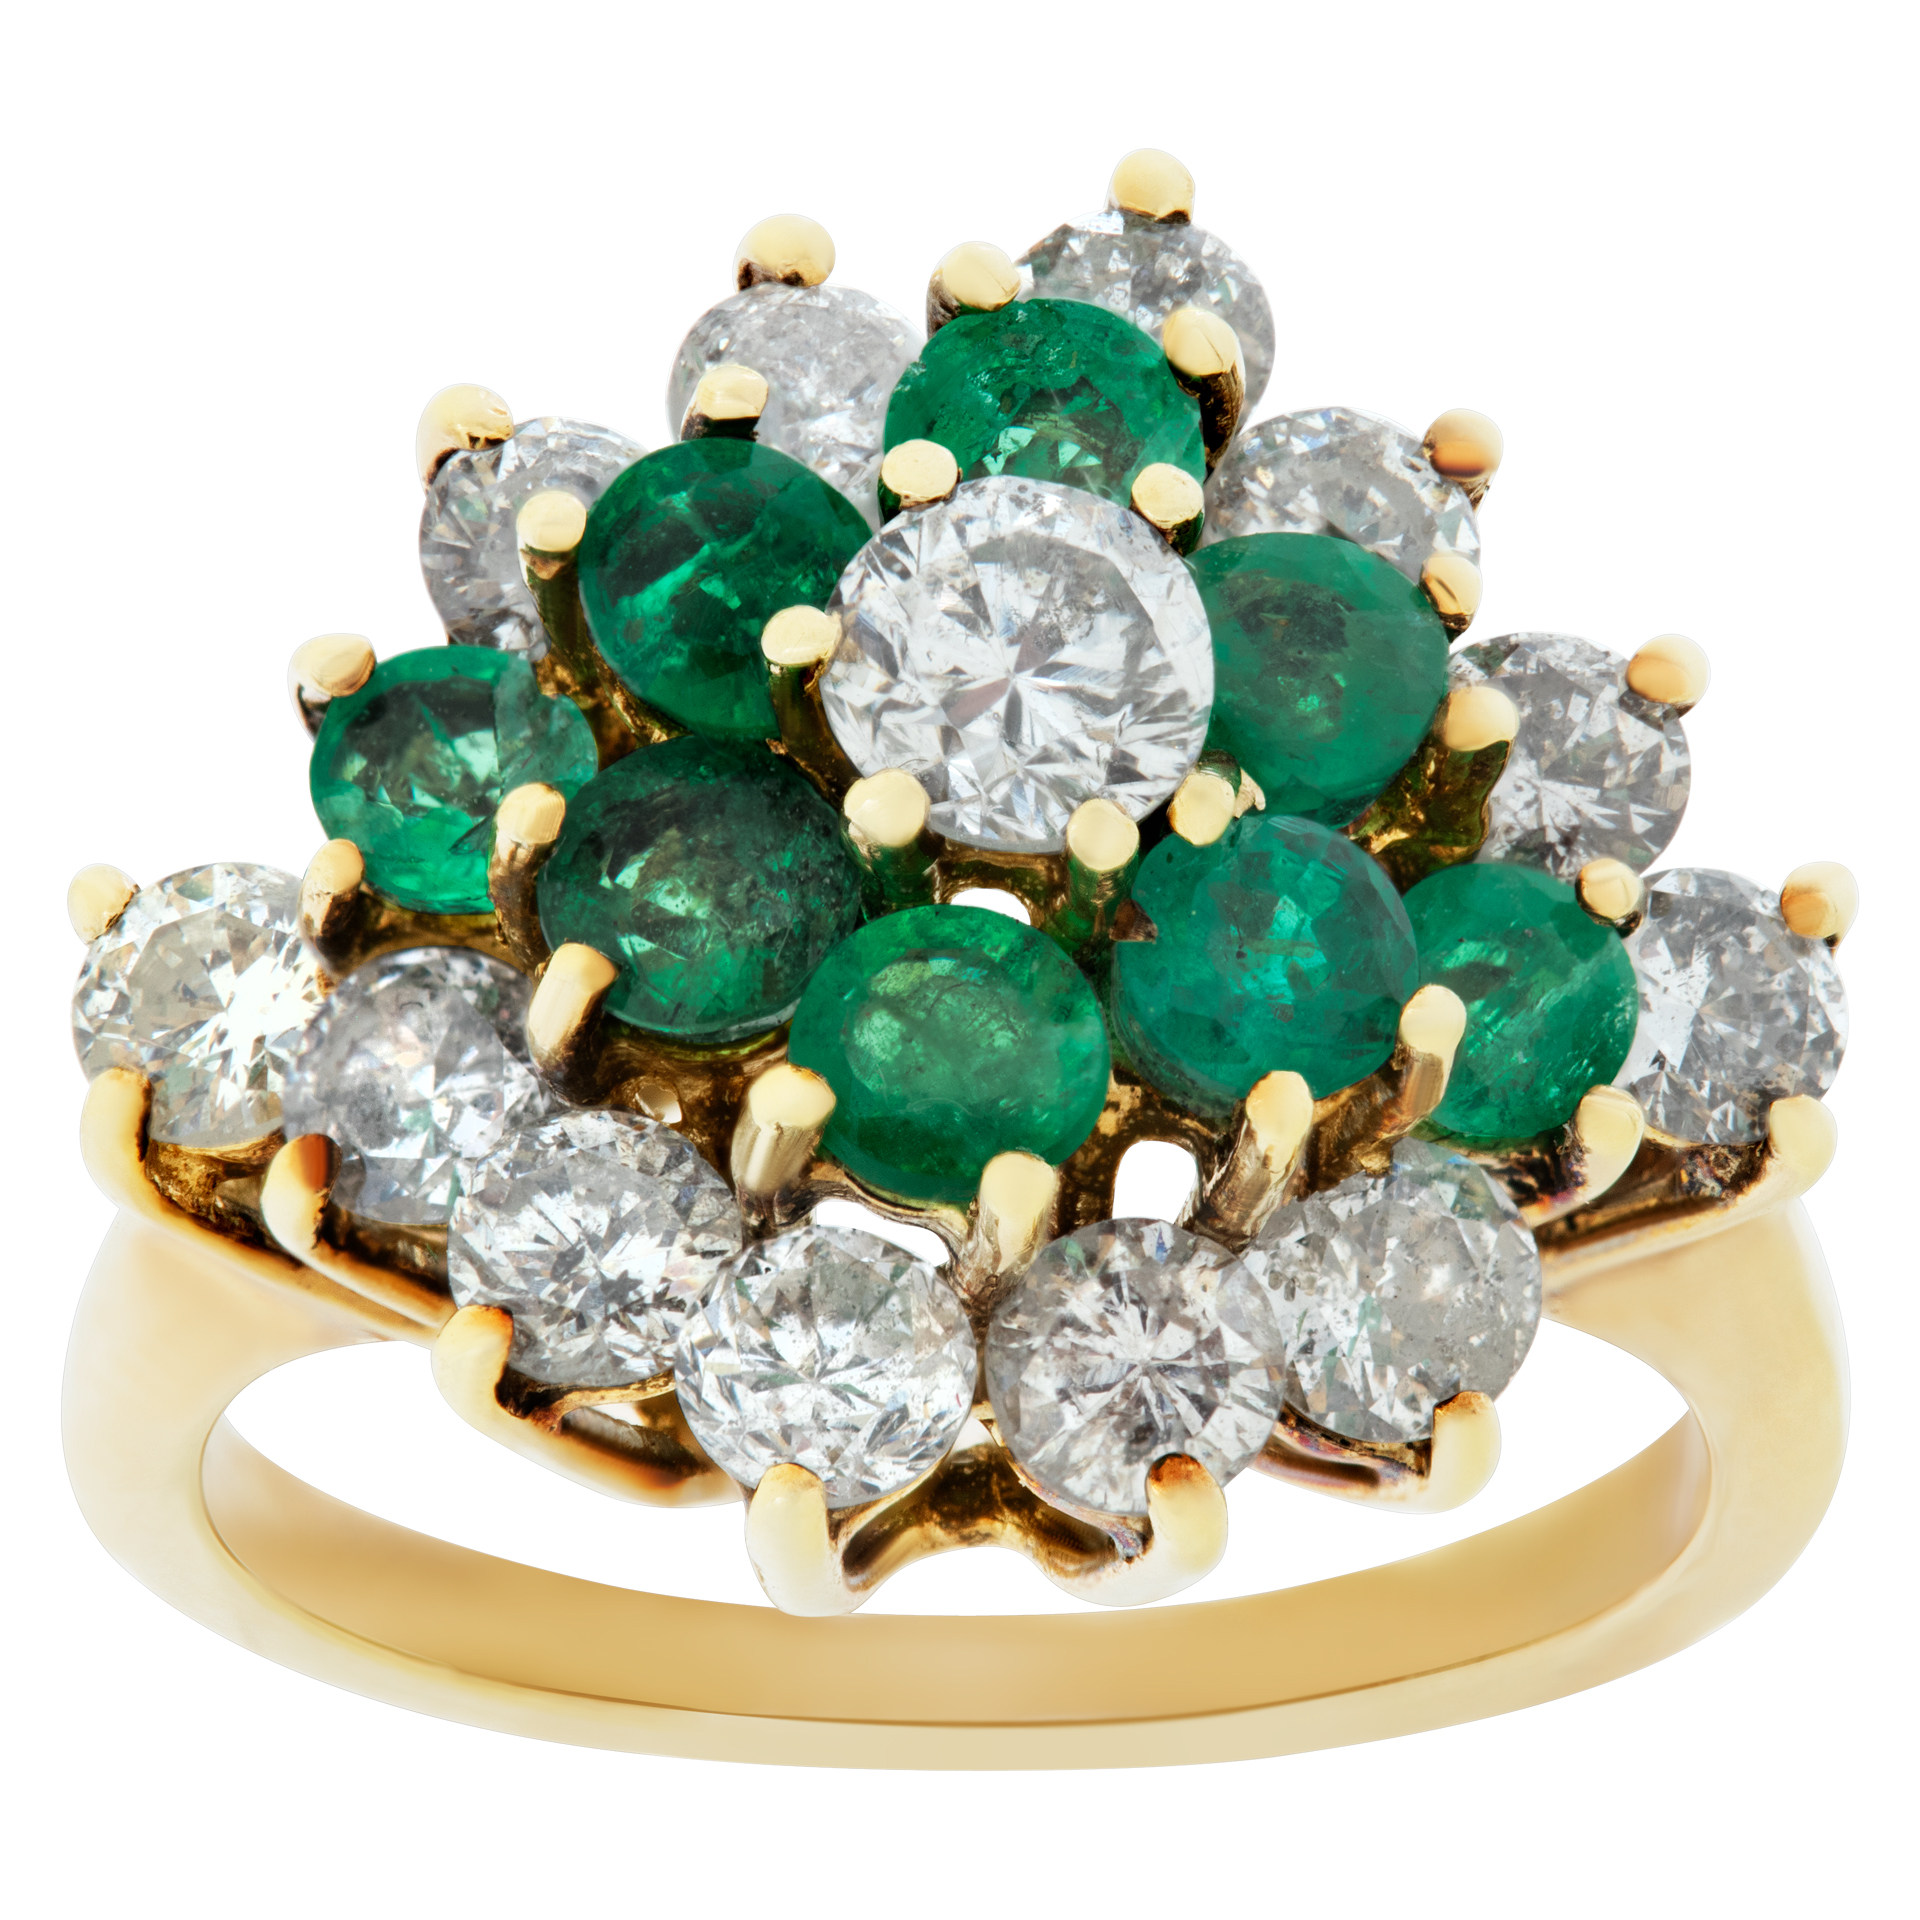 Emerald & Diamond Ring In 14k. 1.00 carats in diamonds.